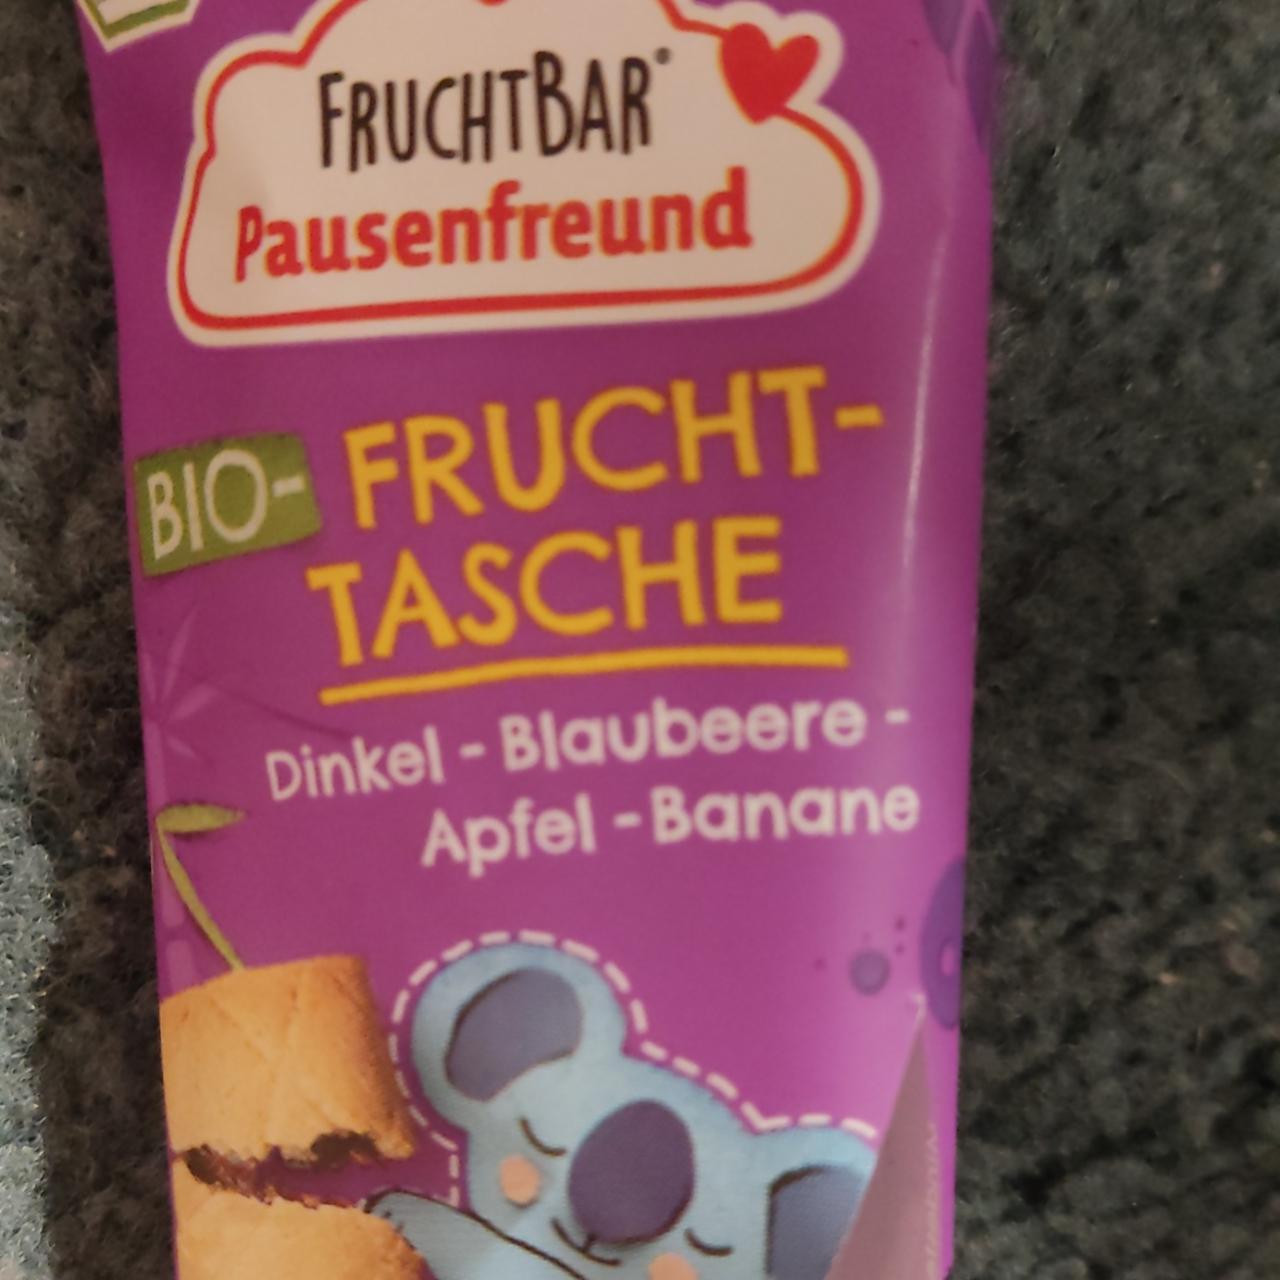 Фото - Батончик фруктовый Pausenfreund Frucht-tasche Fruchtbar